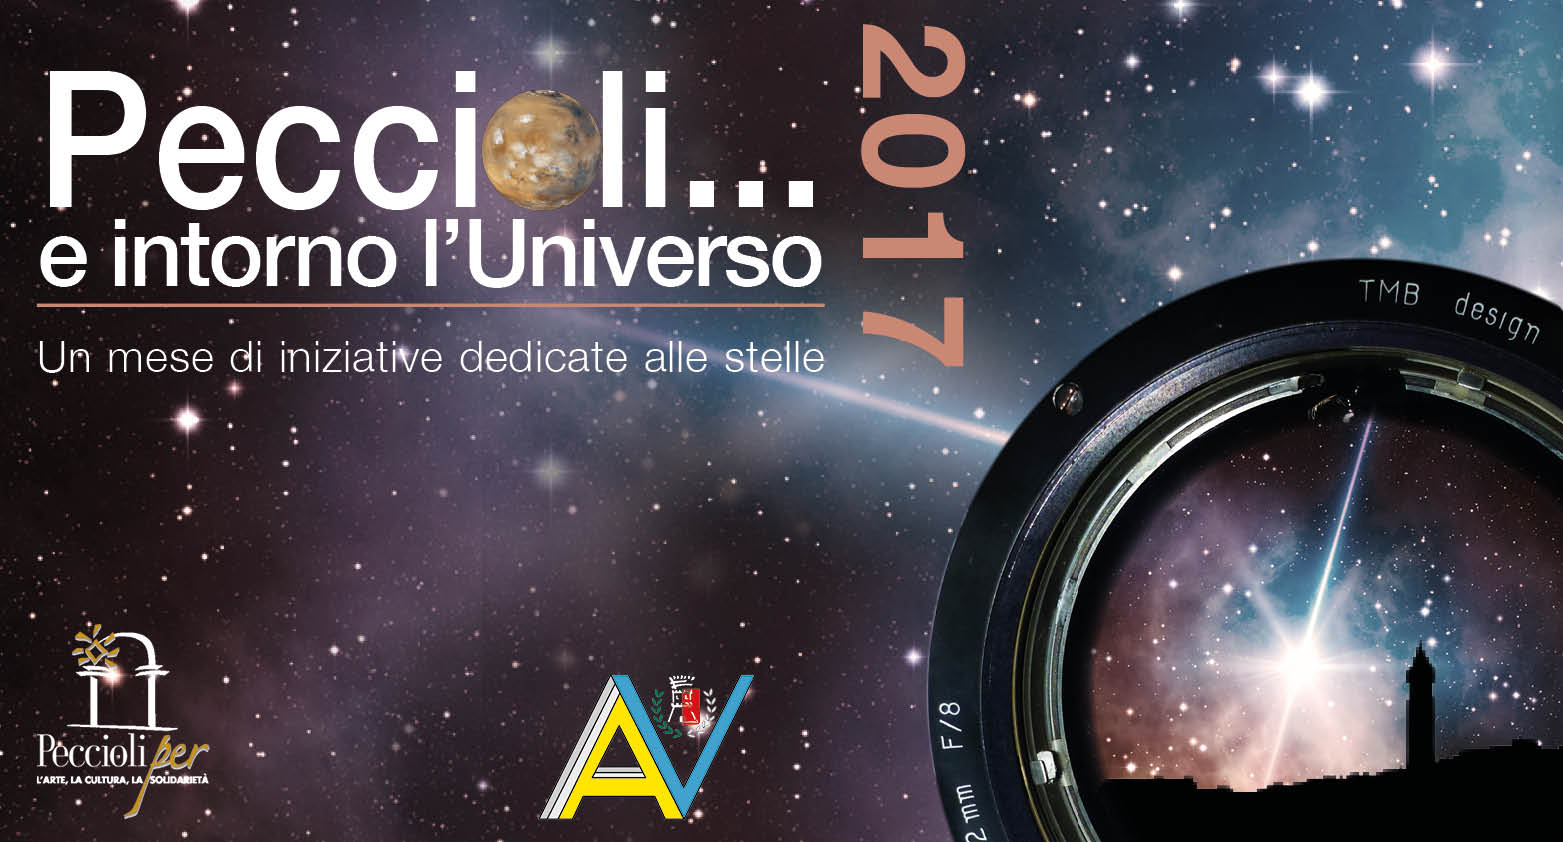 scientific conferences a Peccioli